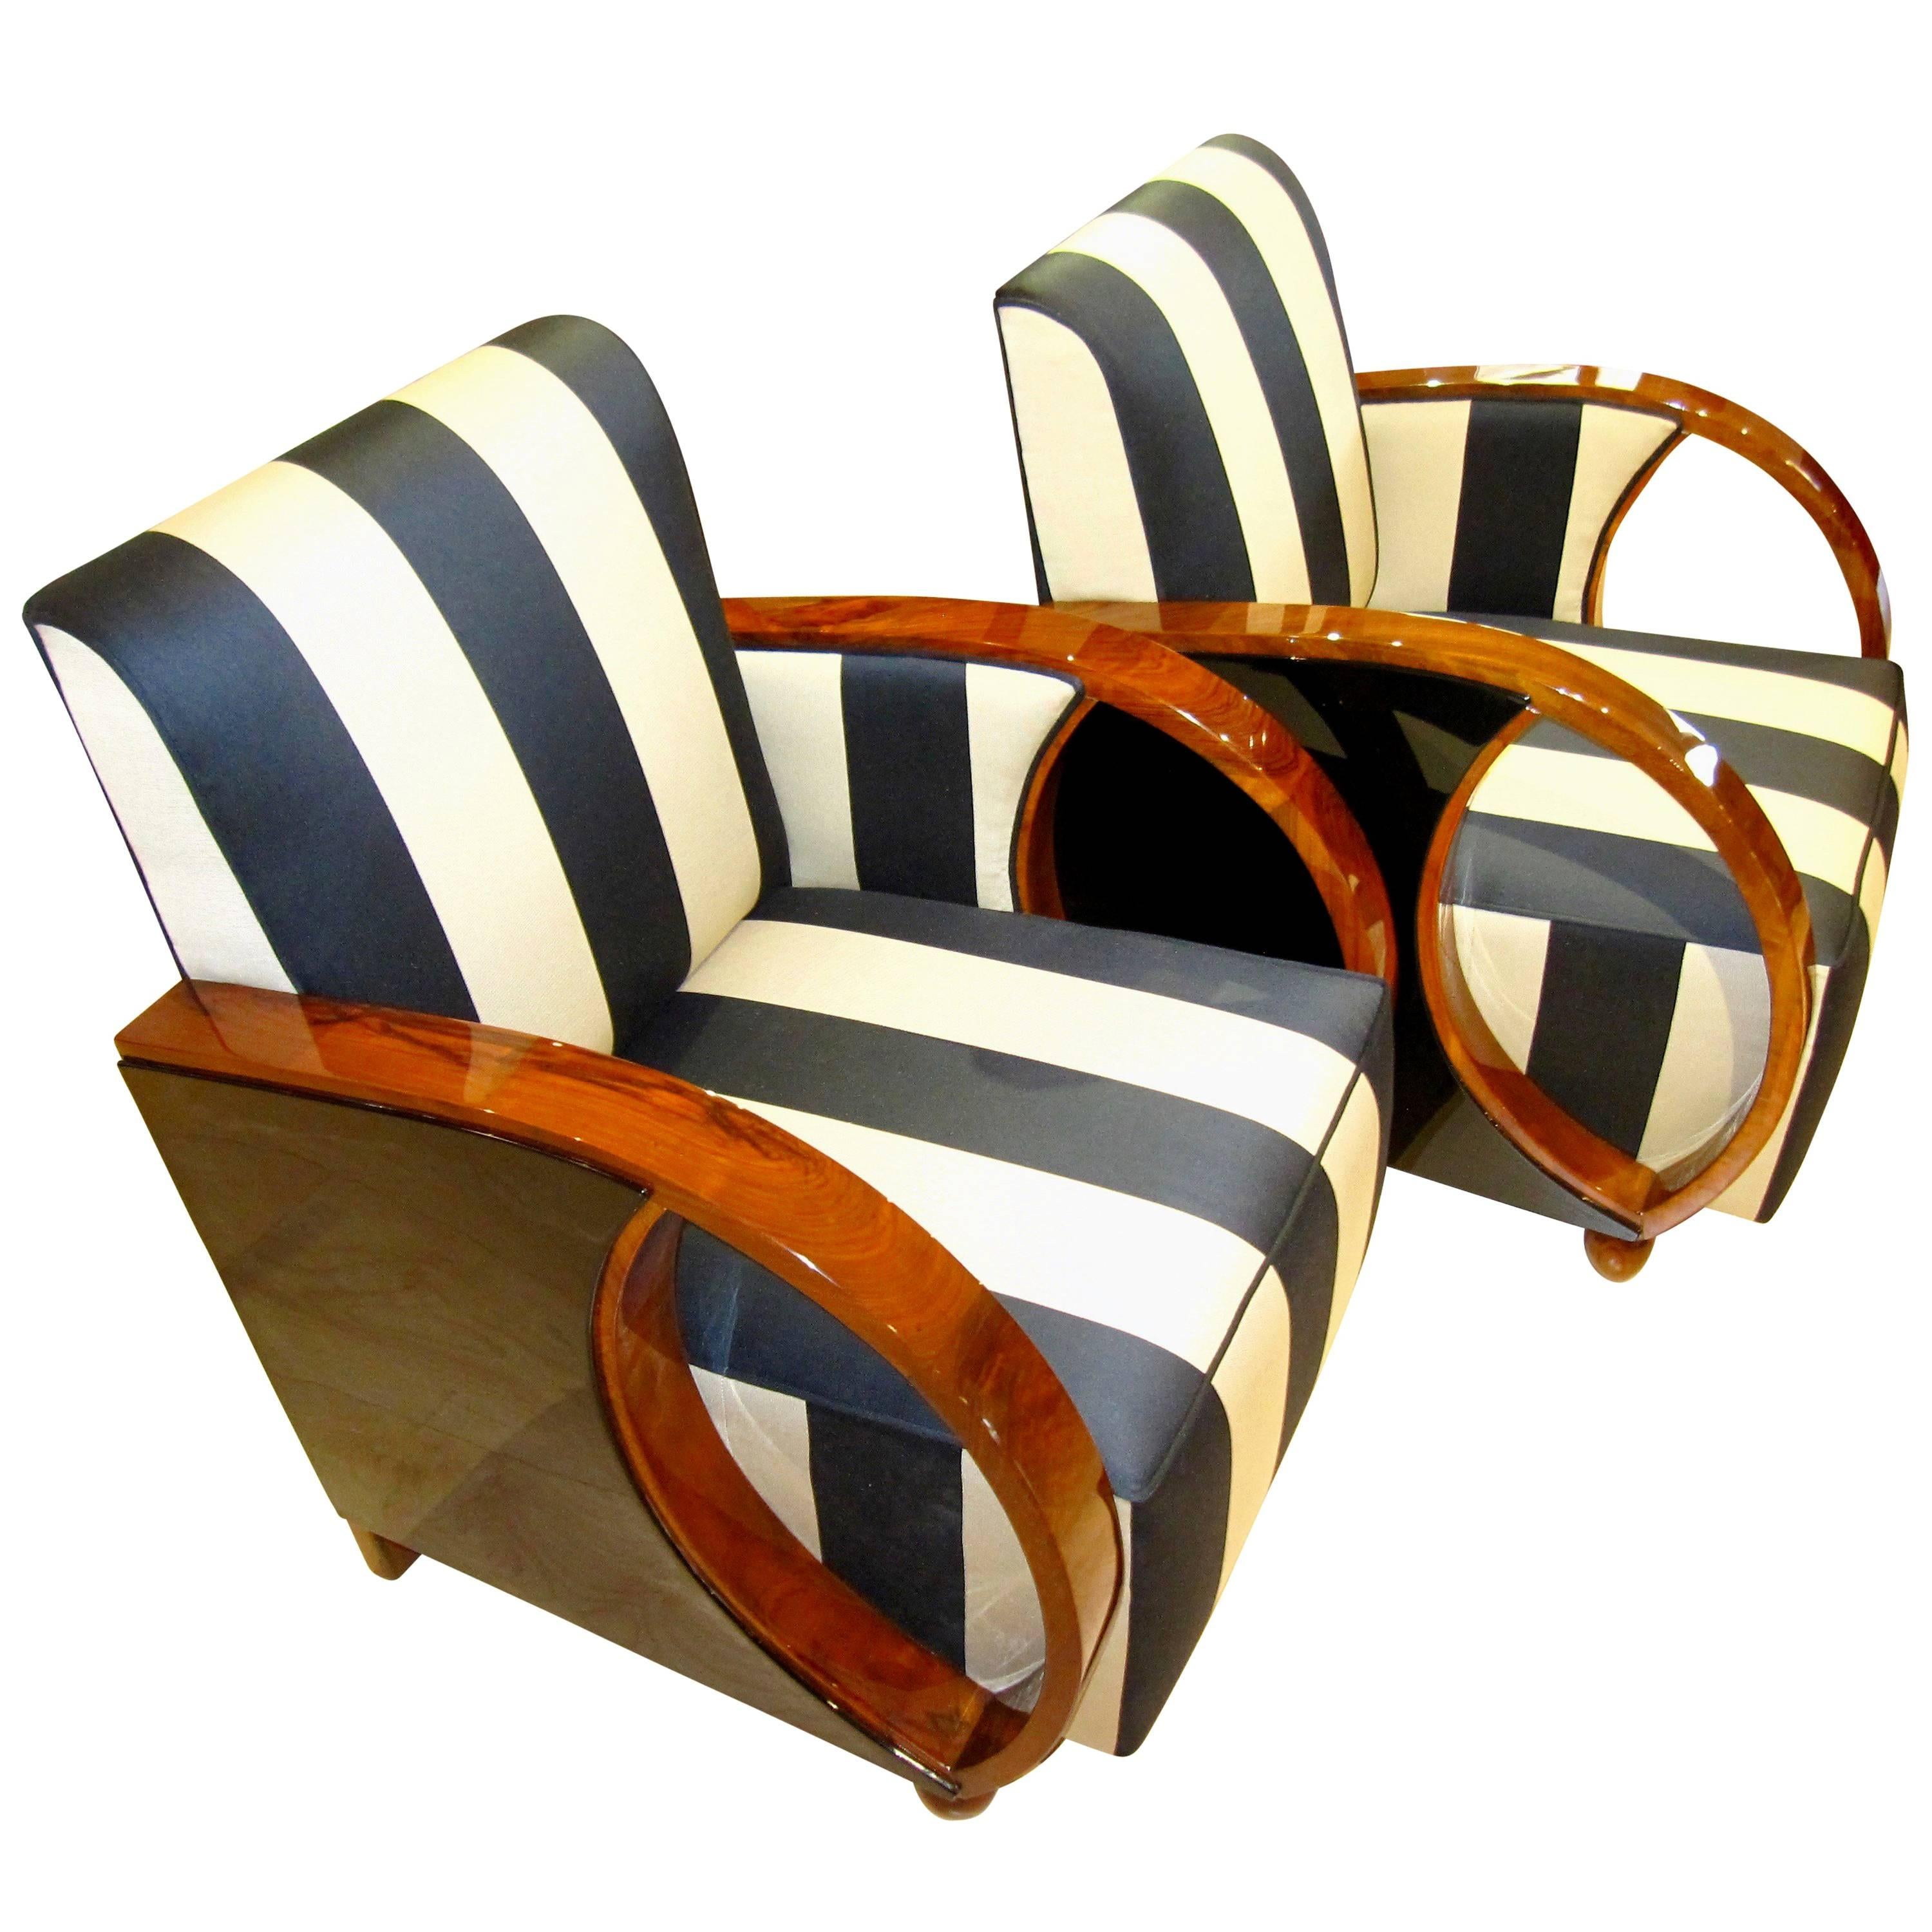 Pair of Art Deco Club Chairs, Walnut and Ebonized, France circa 1930